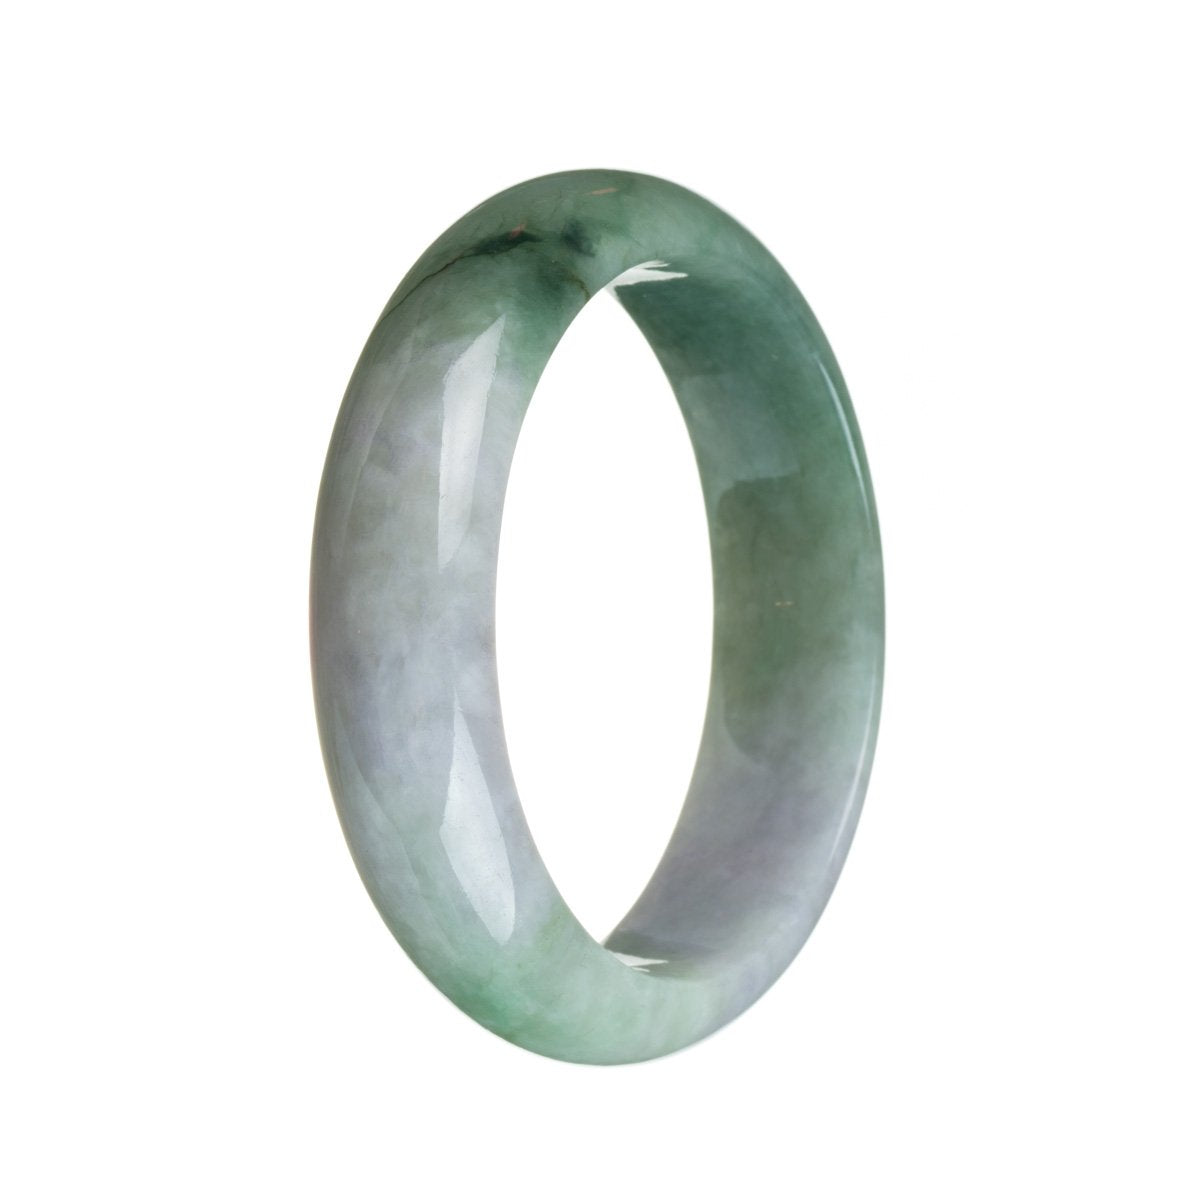 A half-moon shaped bangle bracelet made of genuine untreated lavender and green Burma jade.